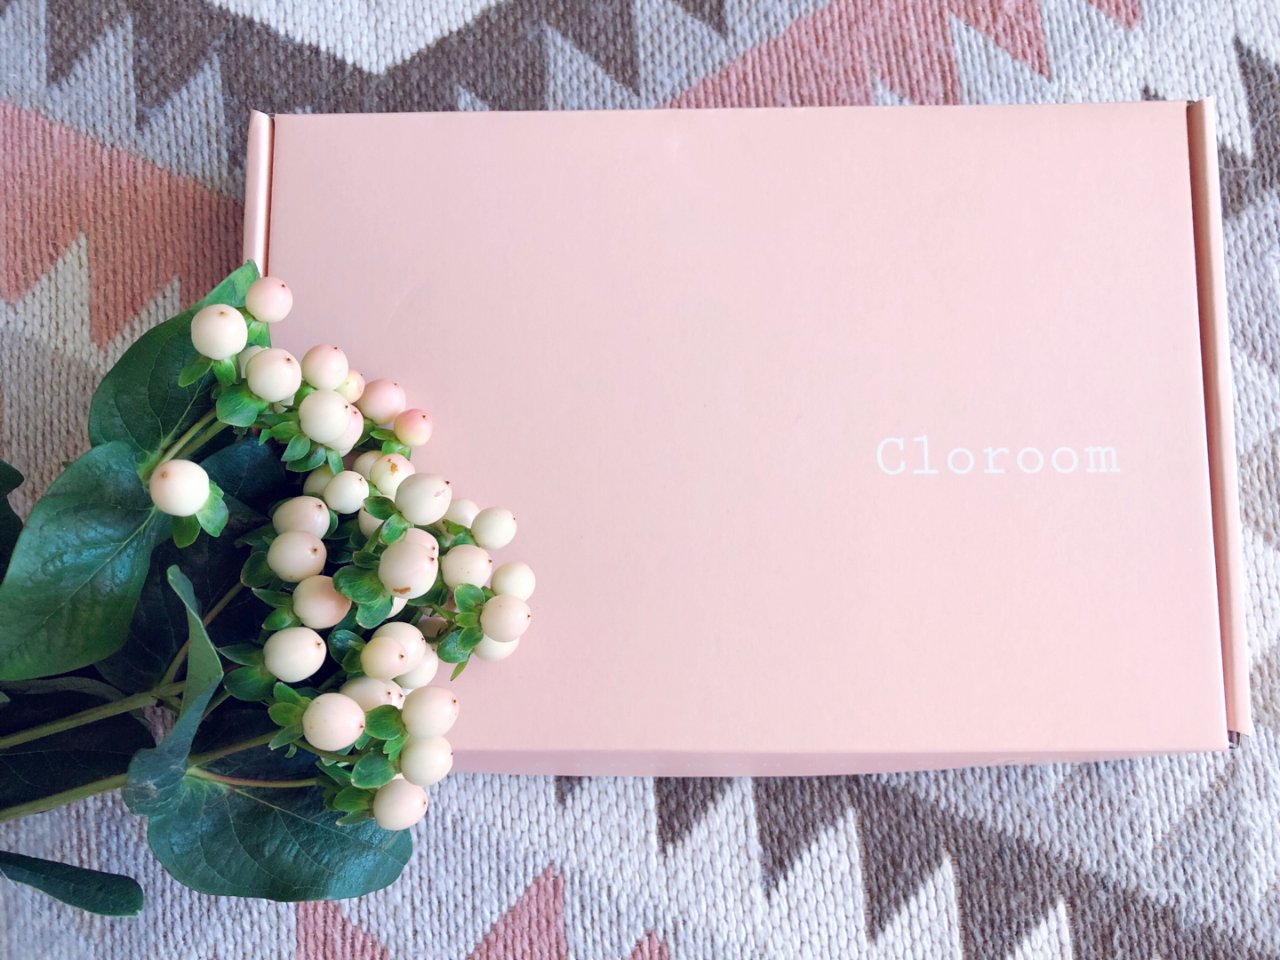 Cloroom给你最精致的舒适体验👑...